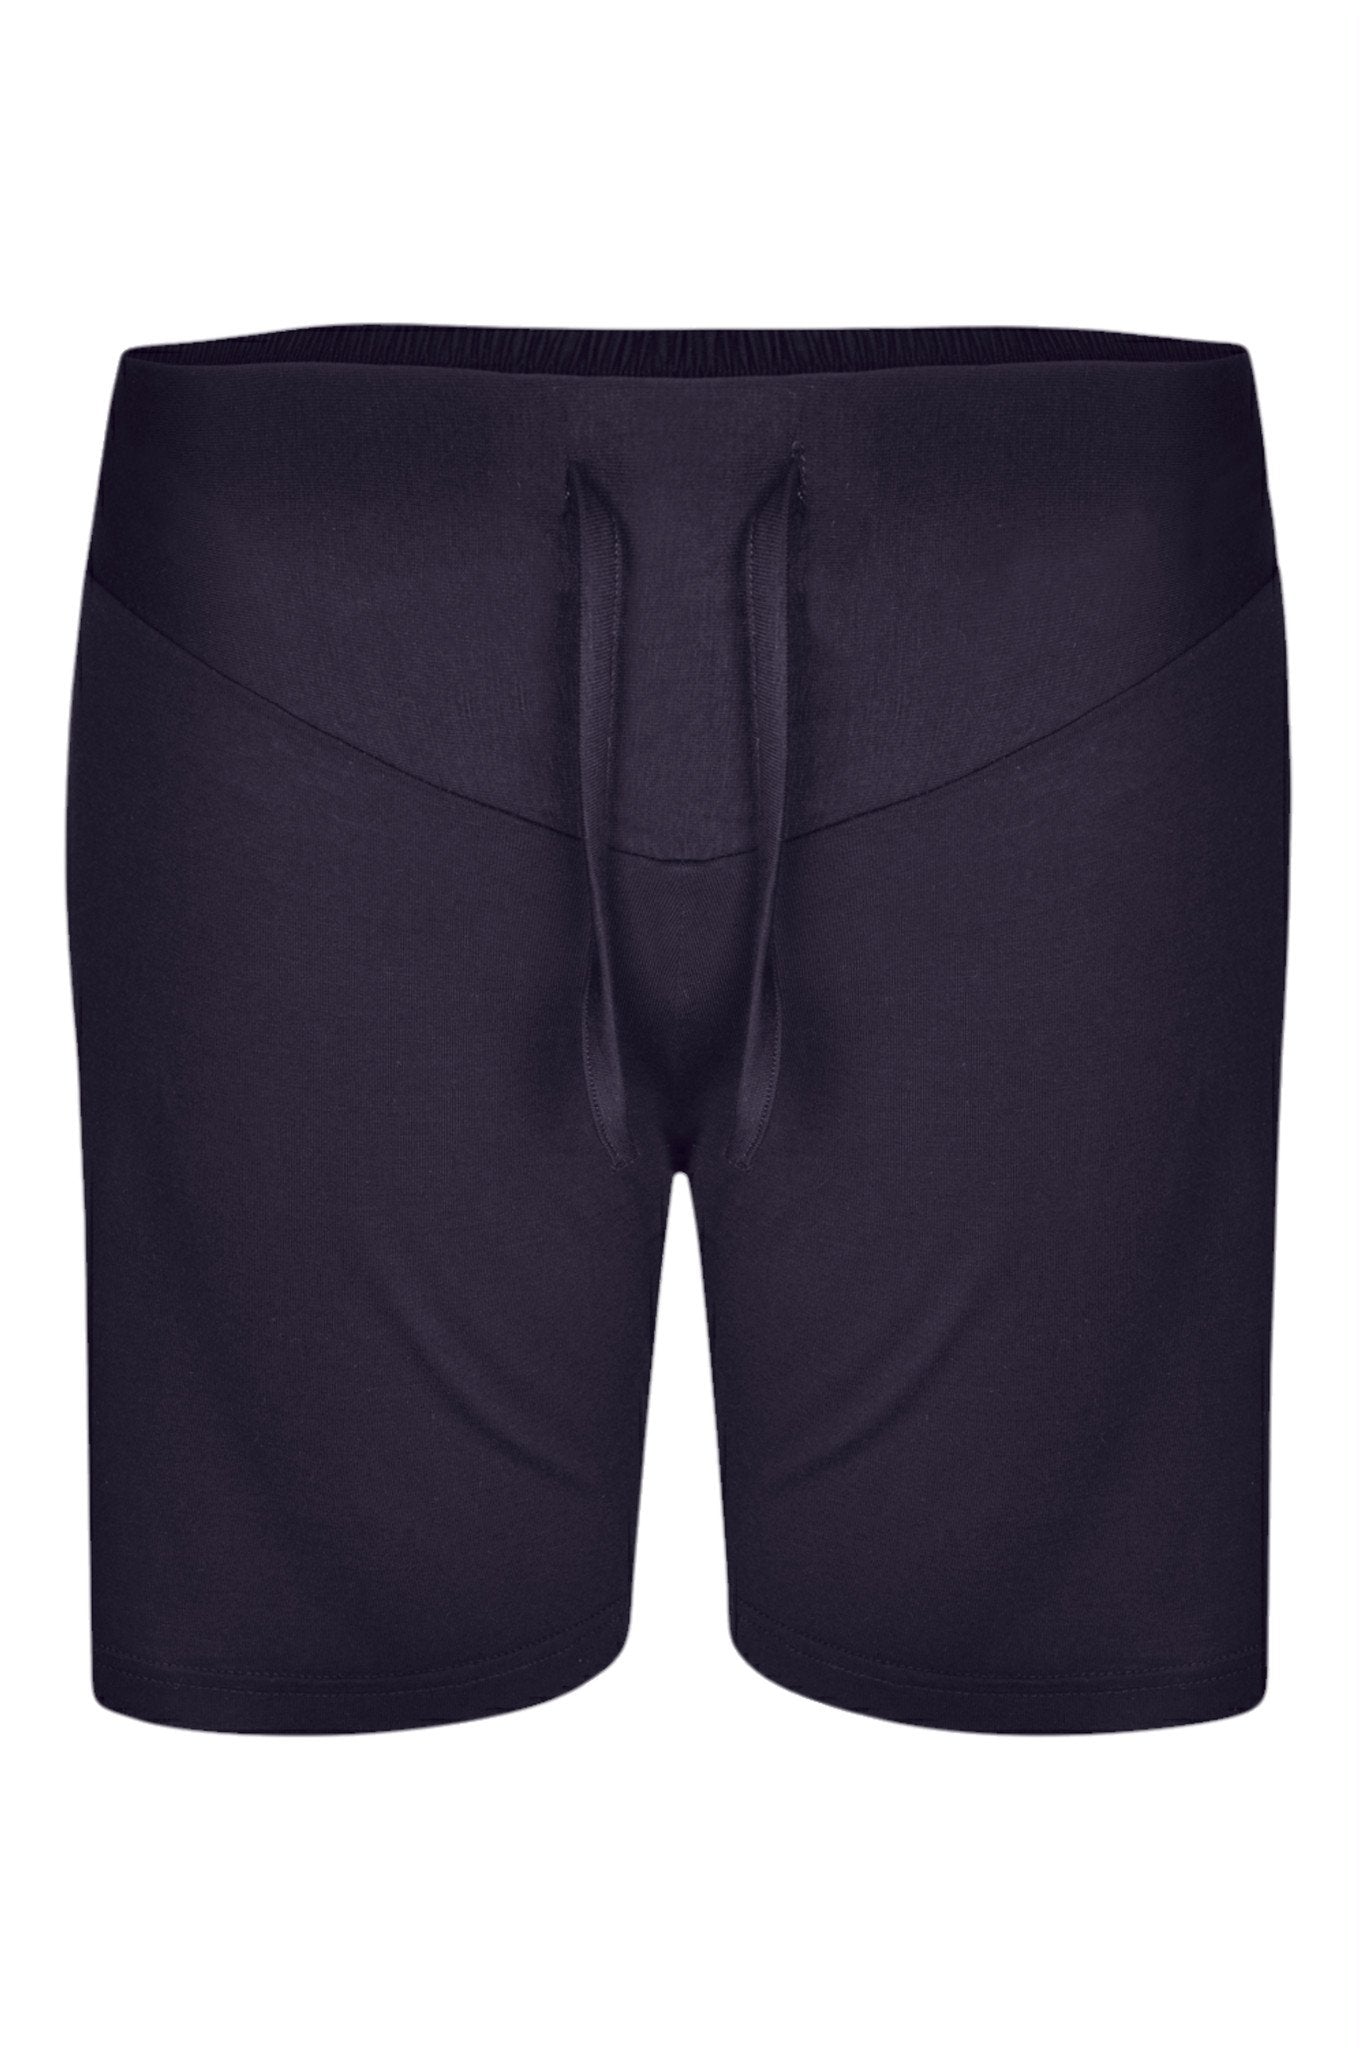 Mamamoosh black pj shorts 1